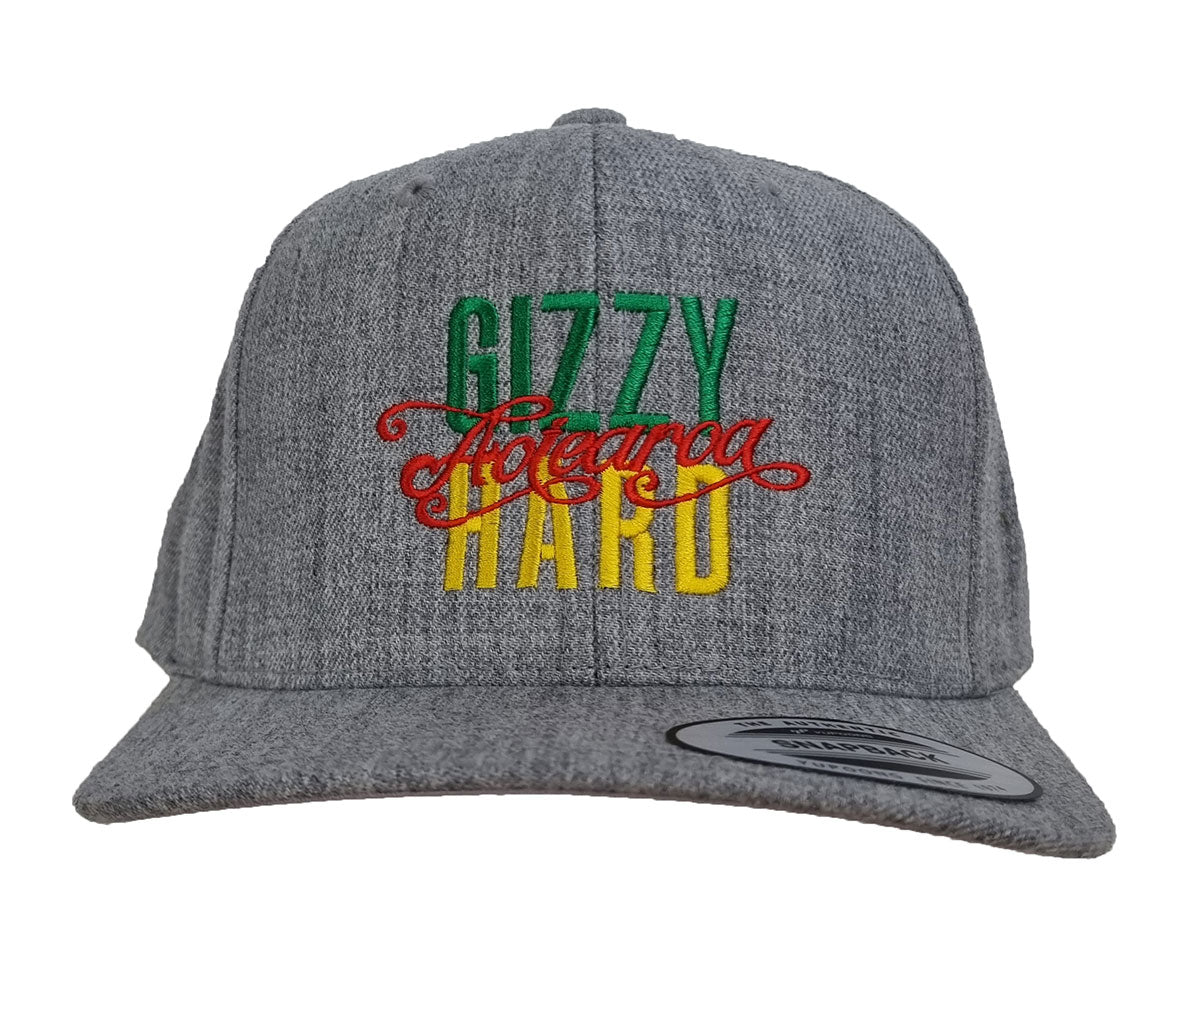 Gizzy Hard Aotearoa Flexfit Curved Peak Cap in grey marle